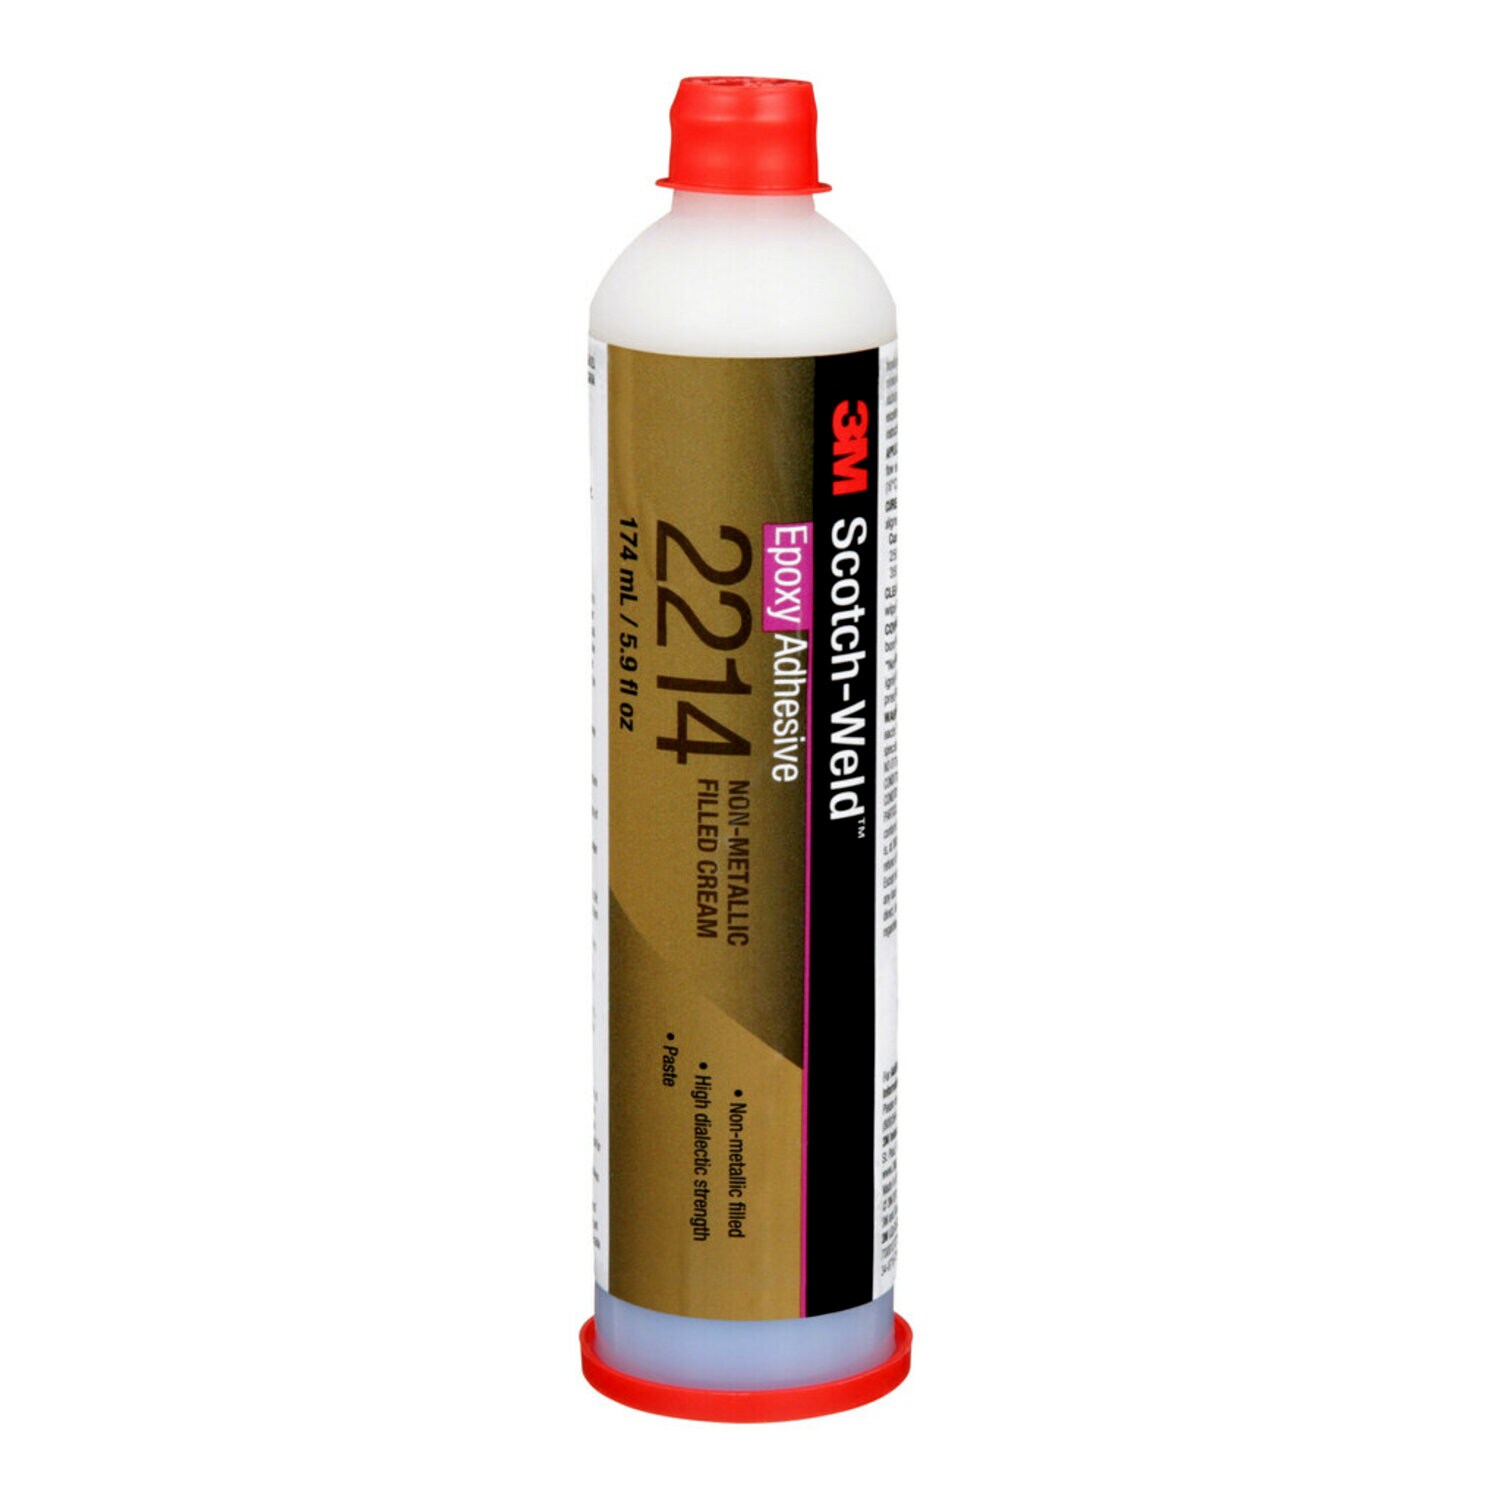 7000121273 - 3M Scotch-Weld Epoxy Adhesive 2214, Non-Metallic Filled, Cream, 6 oz
Cartridge, 4 Each/Case